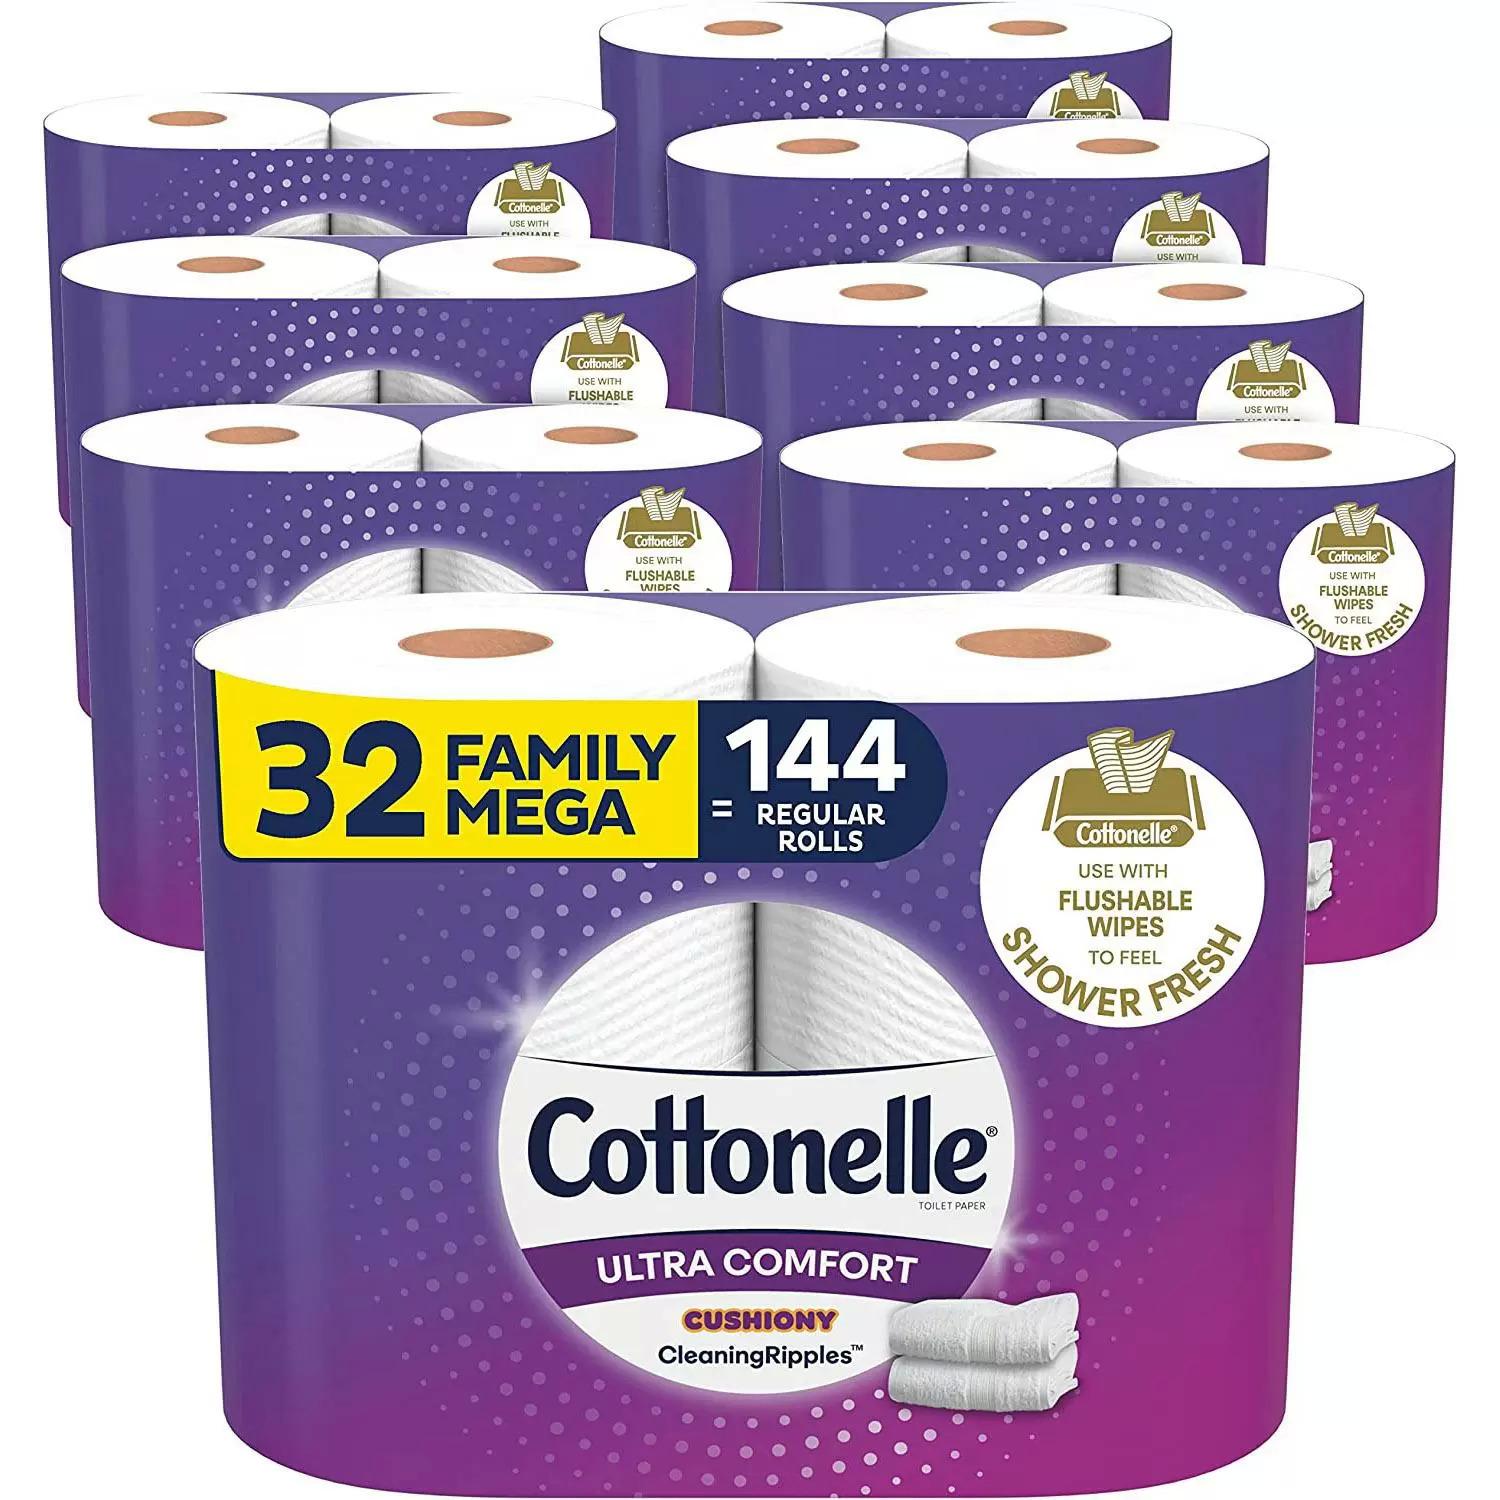 32 Cottonelle Ultra Comfort Family Mega Rolls Toilet Paper for $24.35 Shipped